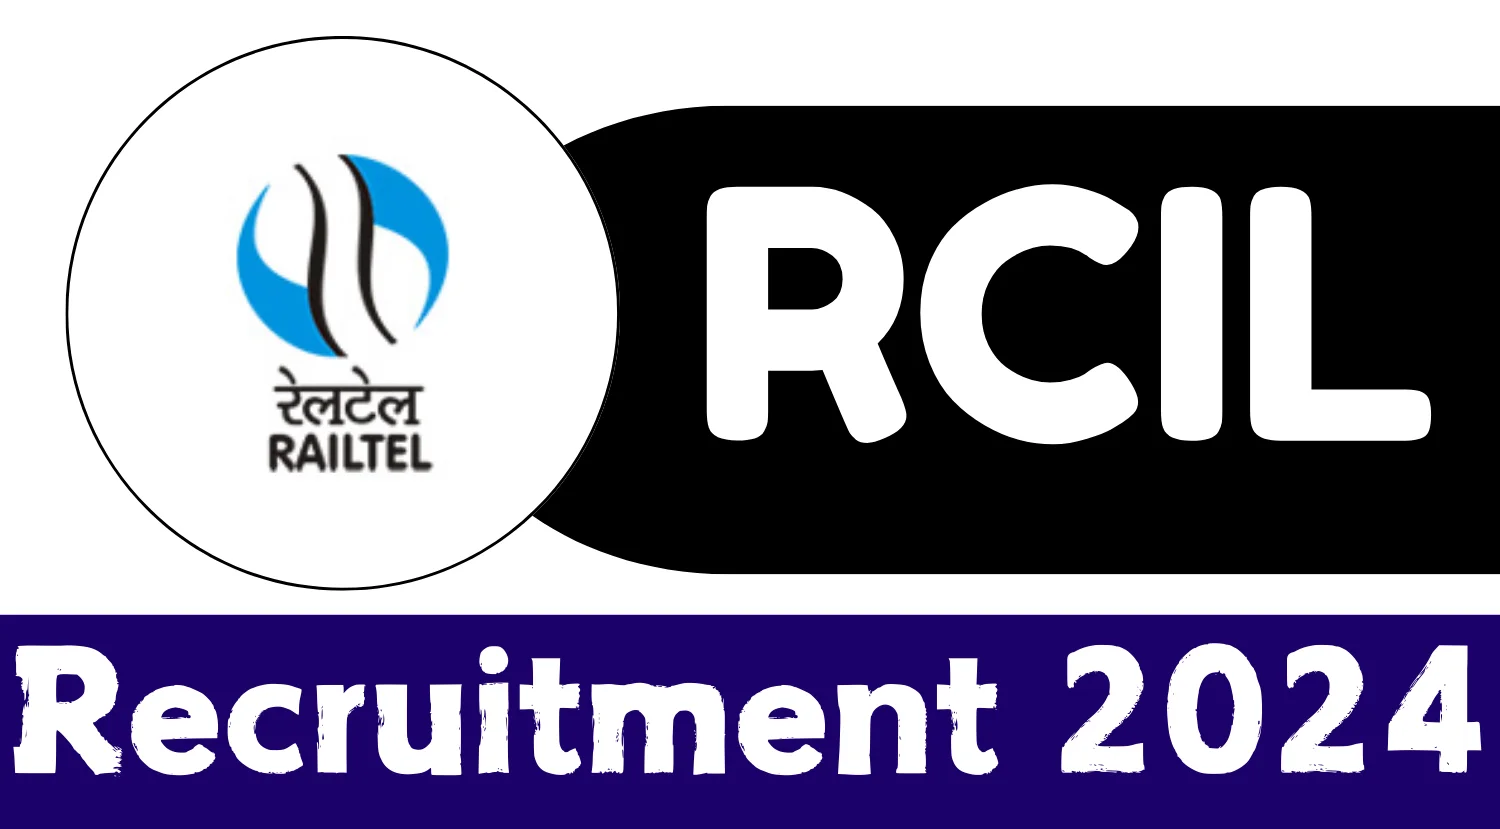 RCIL Recruitment 2024